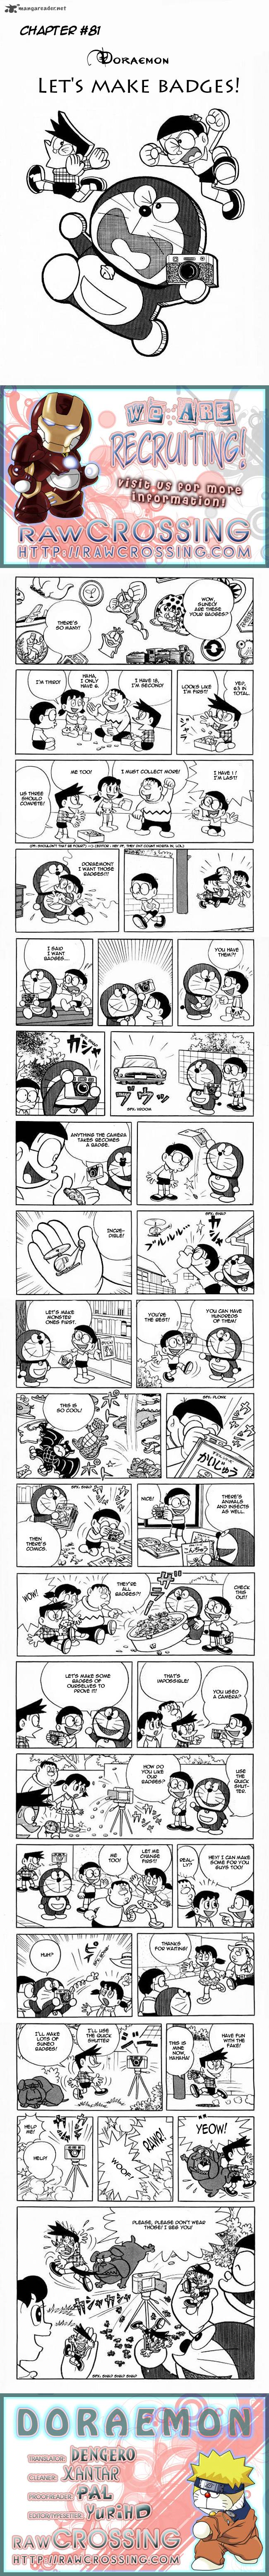 Doraemon 81 1